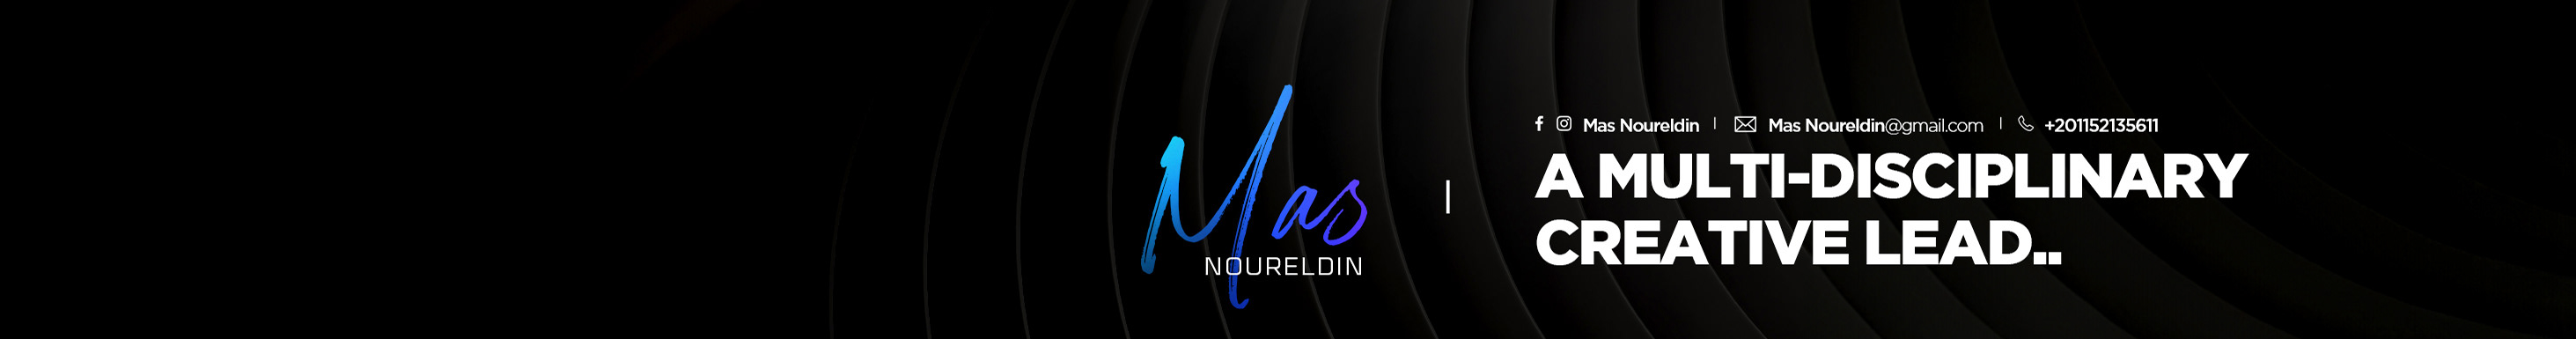 Mas Noureldin's profile banner